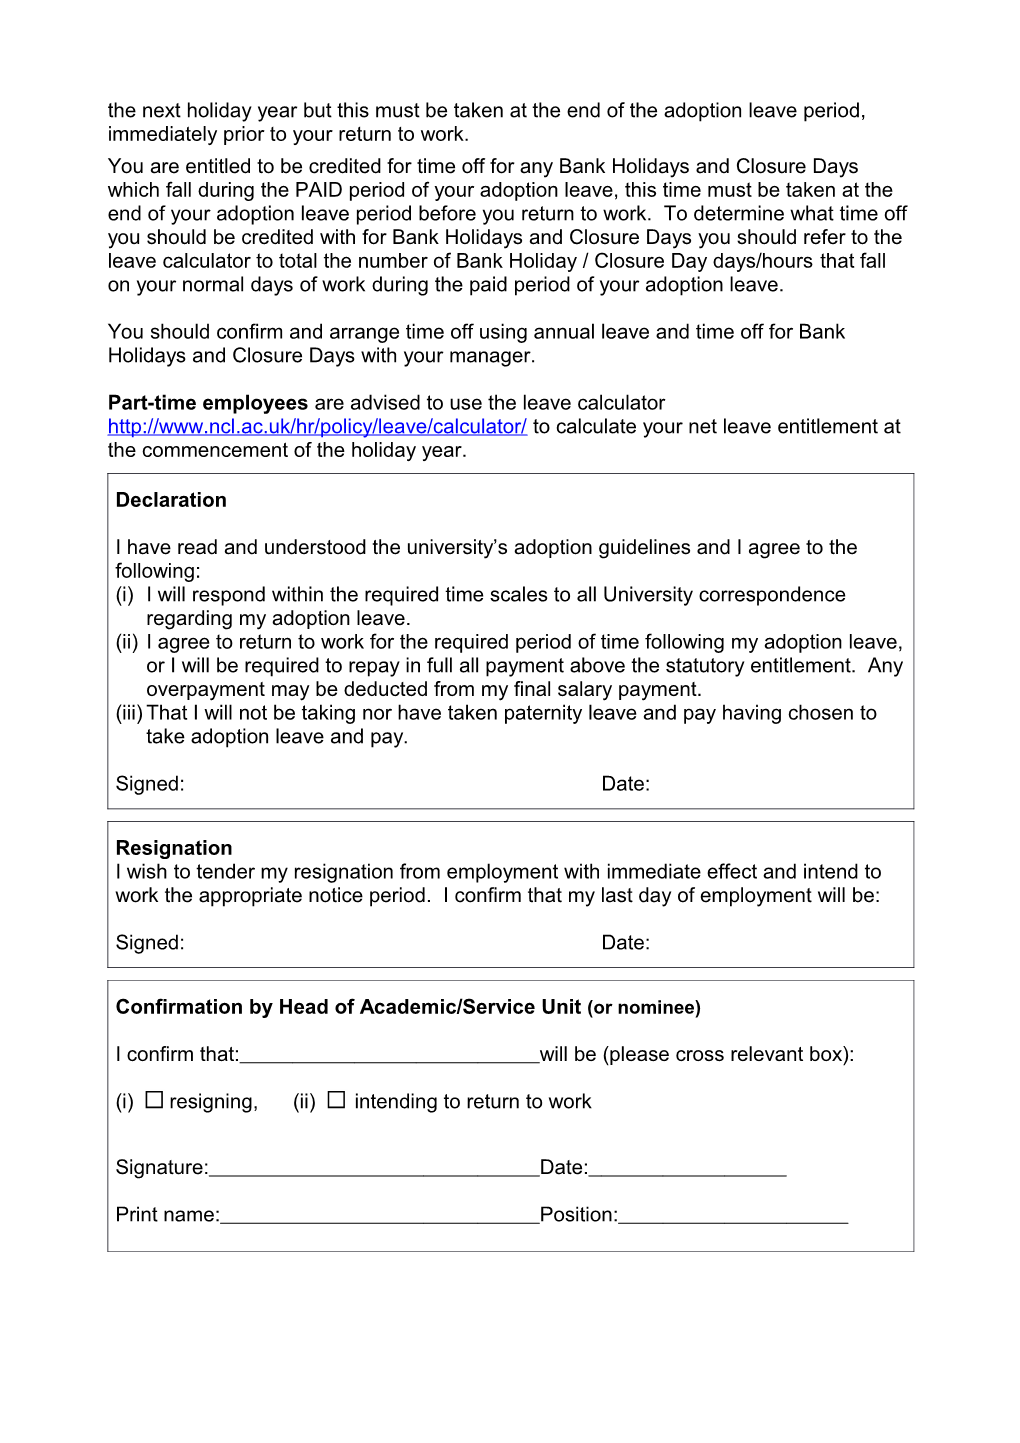 Newcastle University - Adoption Leave Request Form